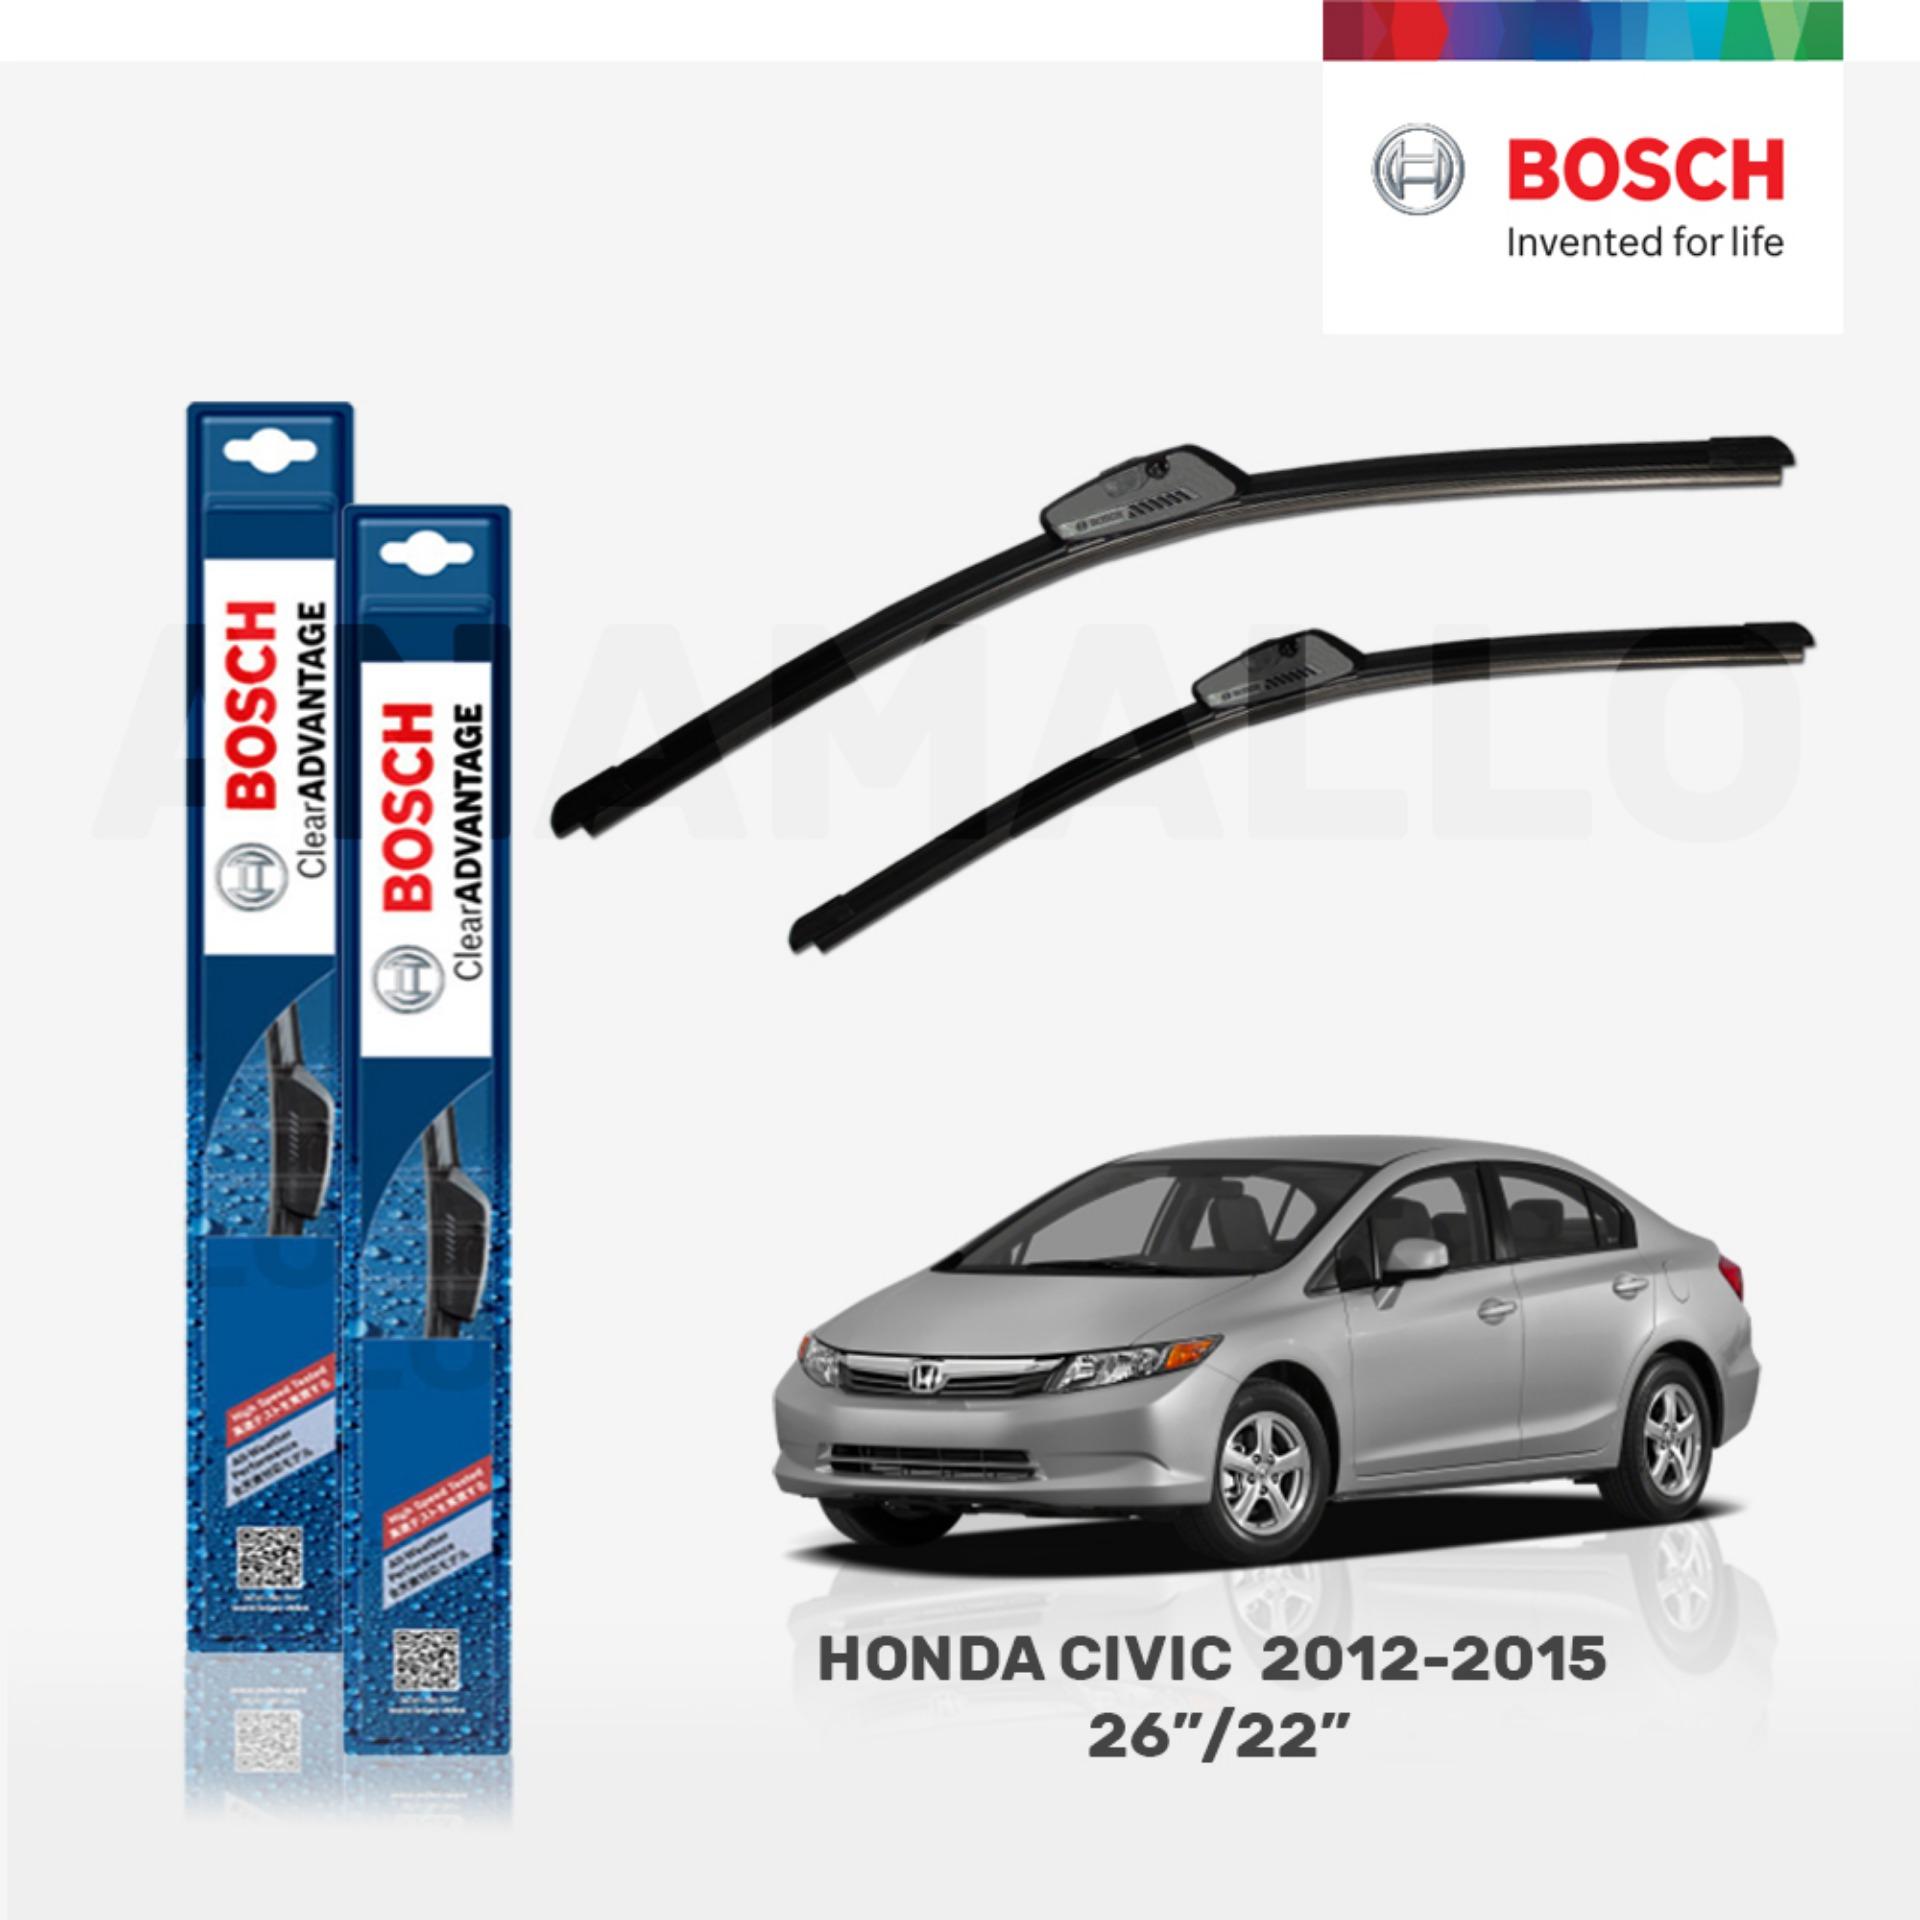 2016 Honda Civic Wiper Blade Size - Latest Cars 2016 Honda Civic Sedan Windshield Wiper Size